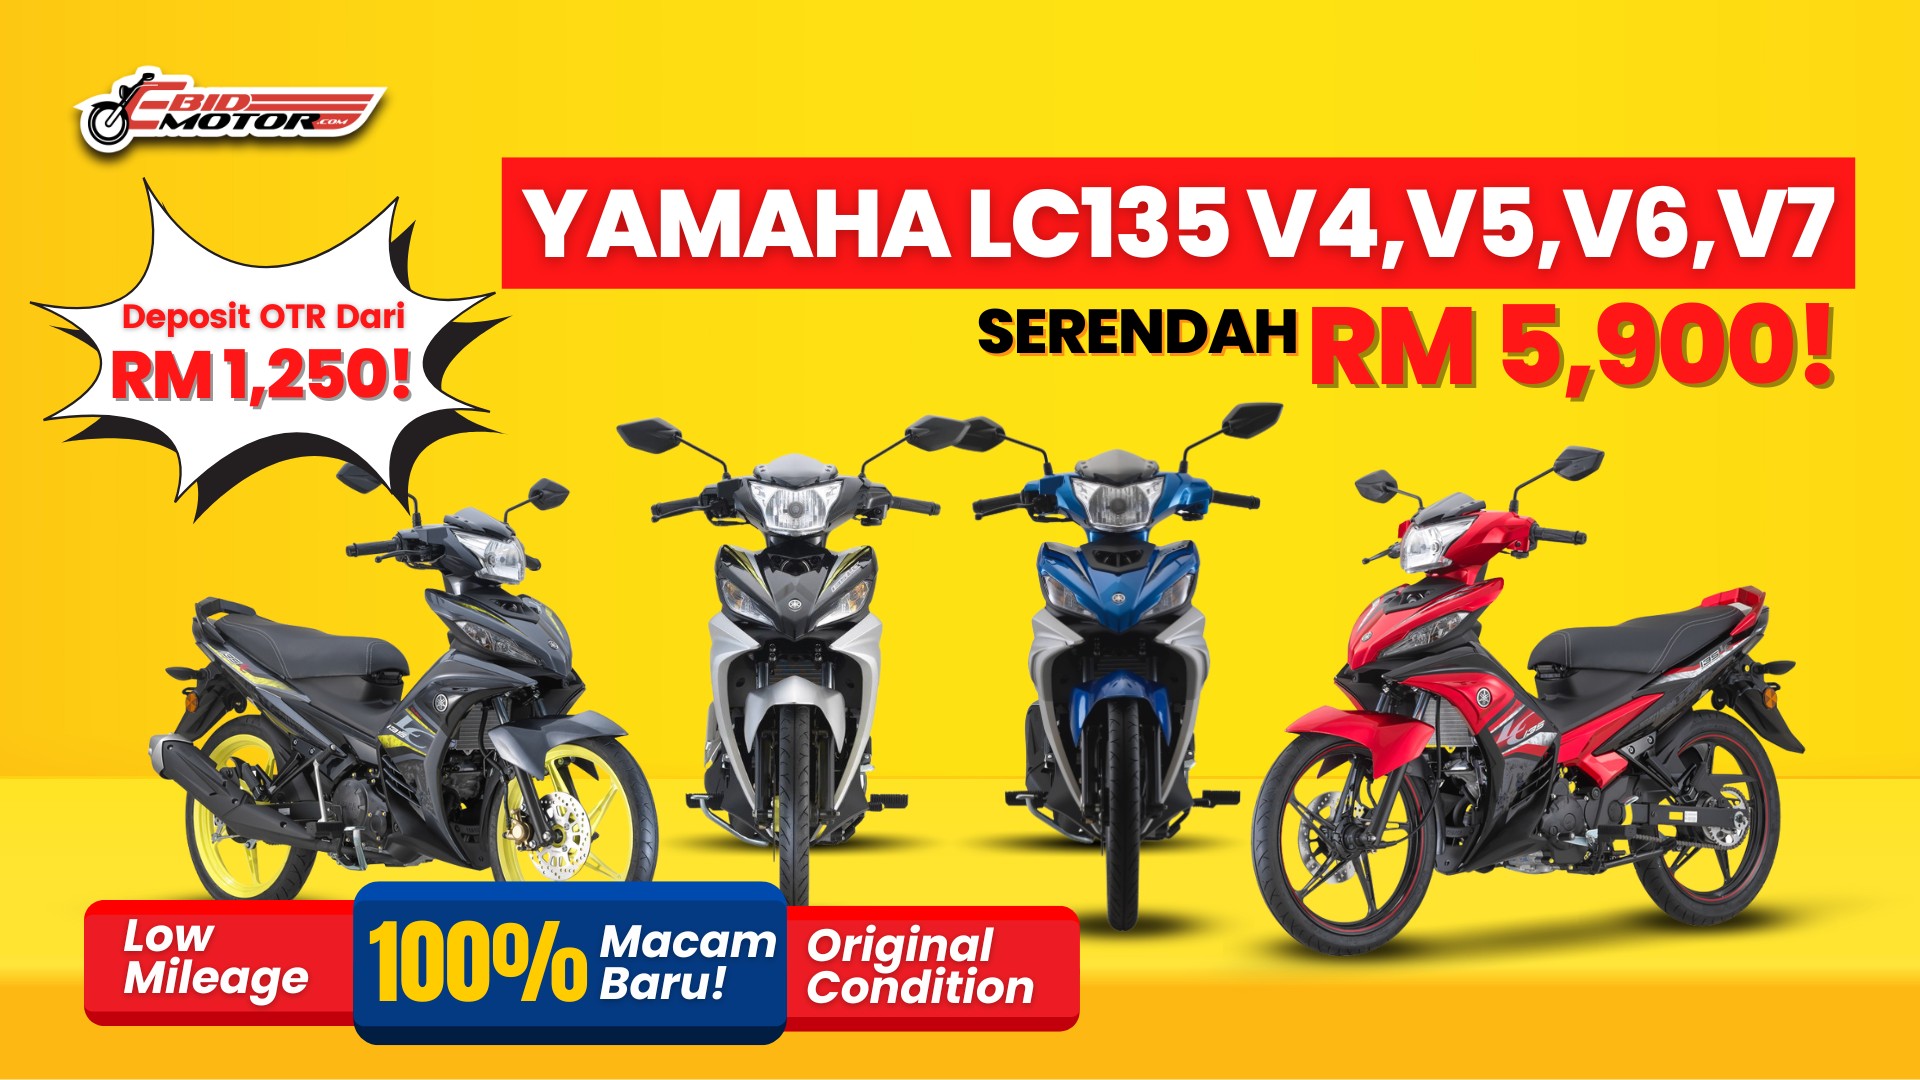 Yamaha LC135 TURUN HARGA! Low Mileage, Tahun Baru, Gaji RM 1,500 Confirm Lulus!